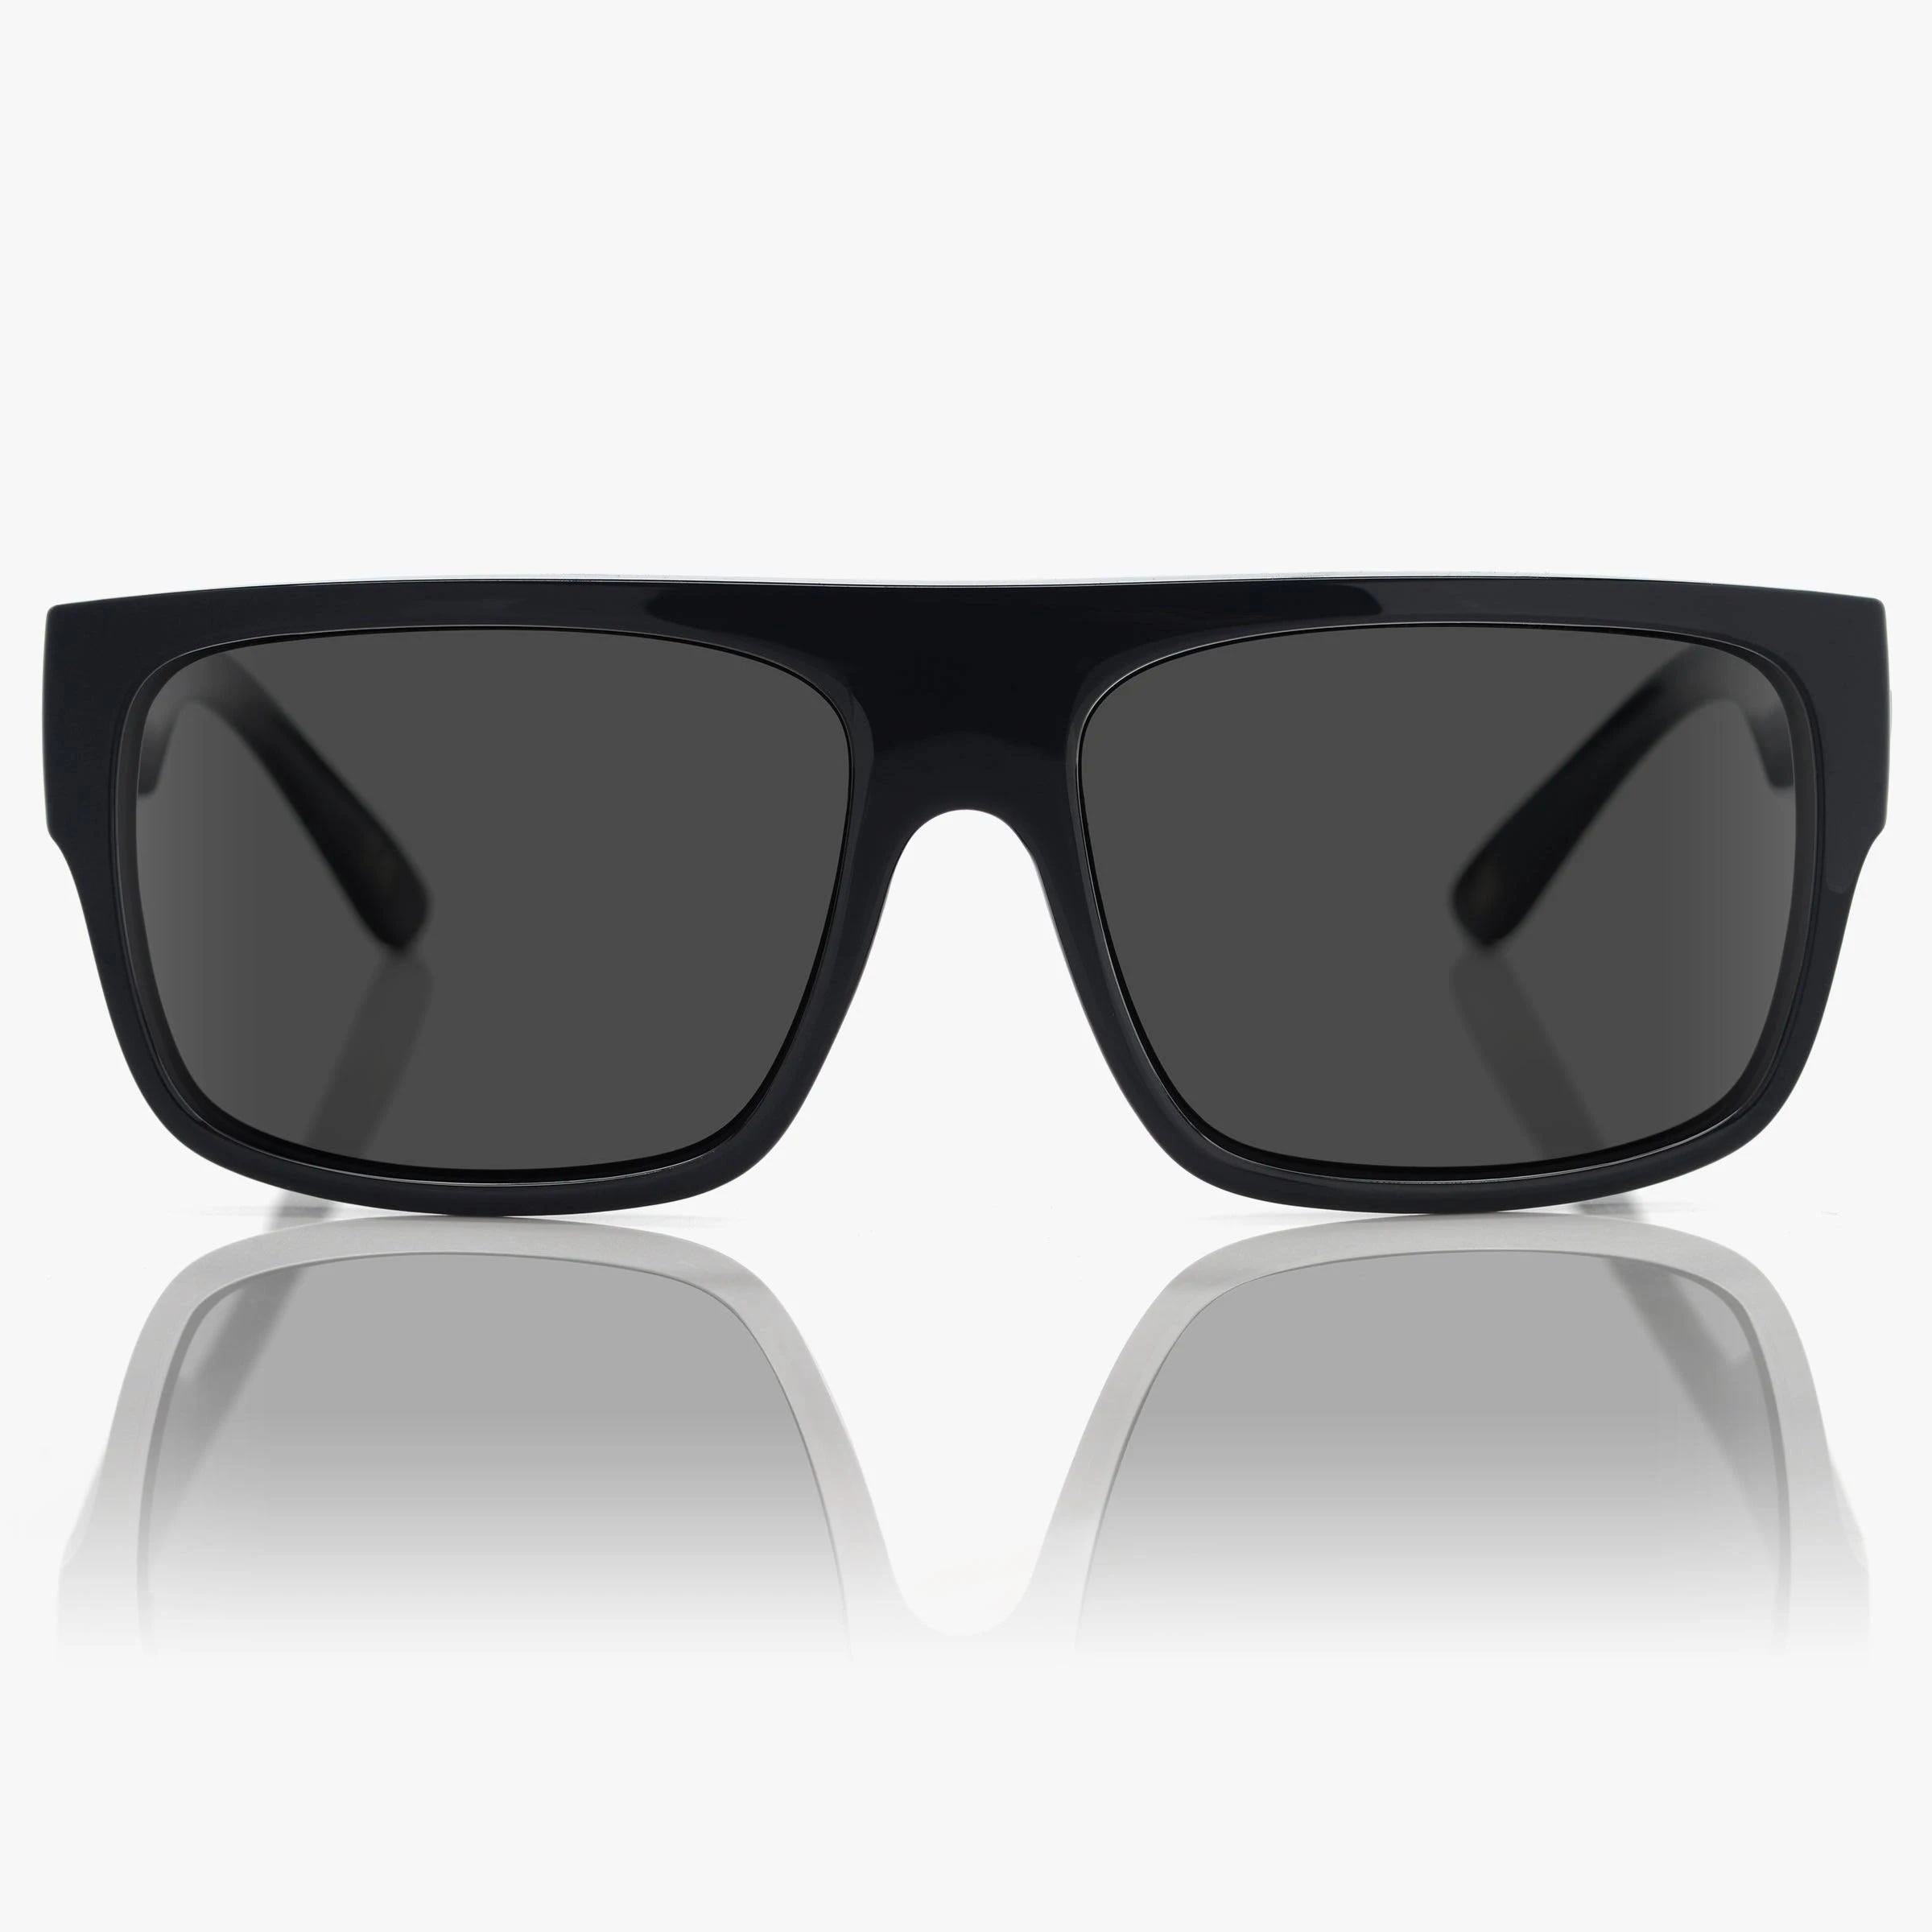 Classico Flattop Black Gloss Sunglasses with Polarized Lenses | Image